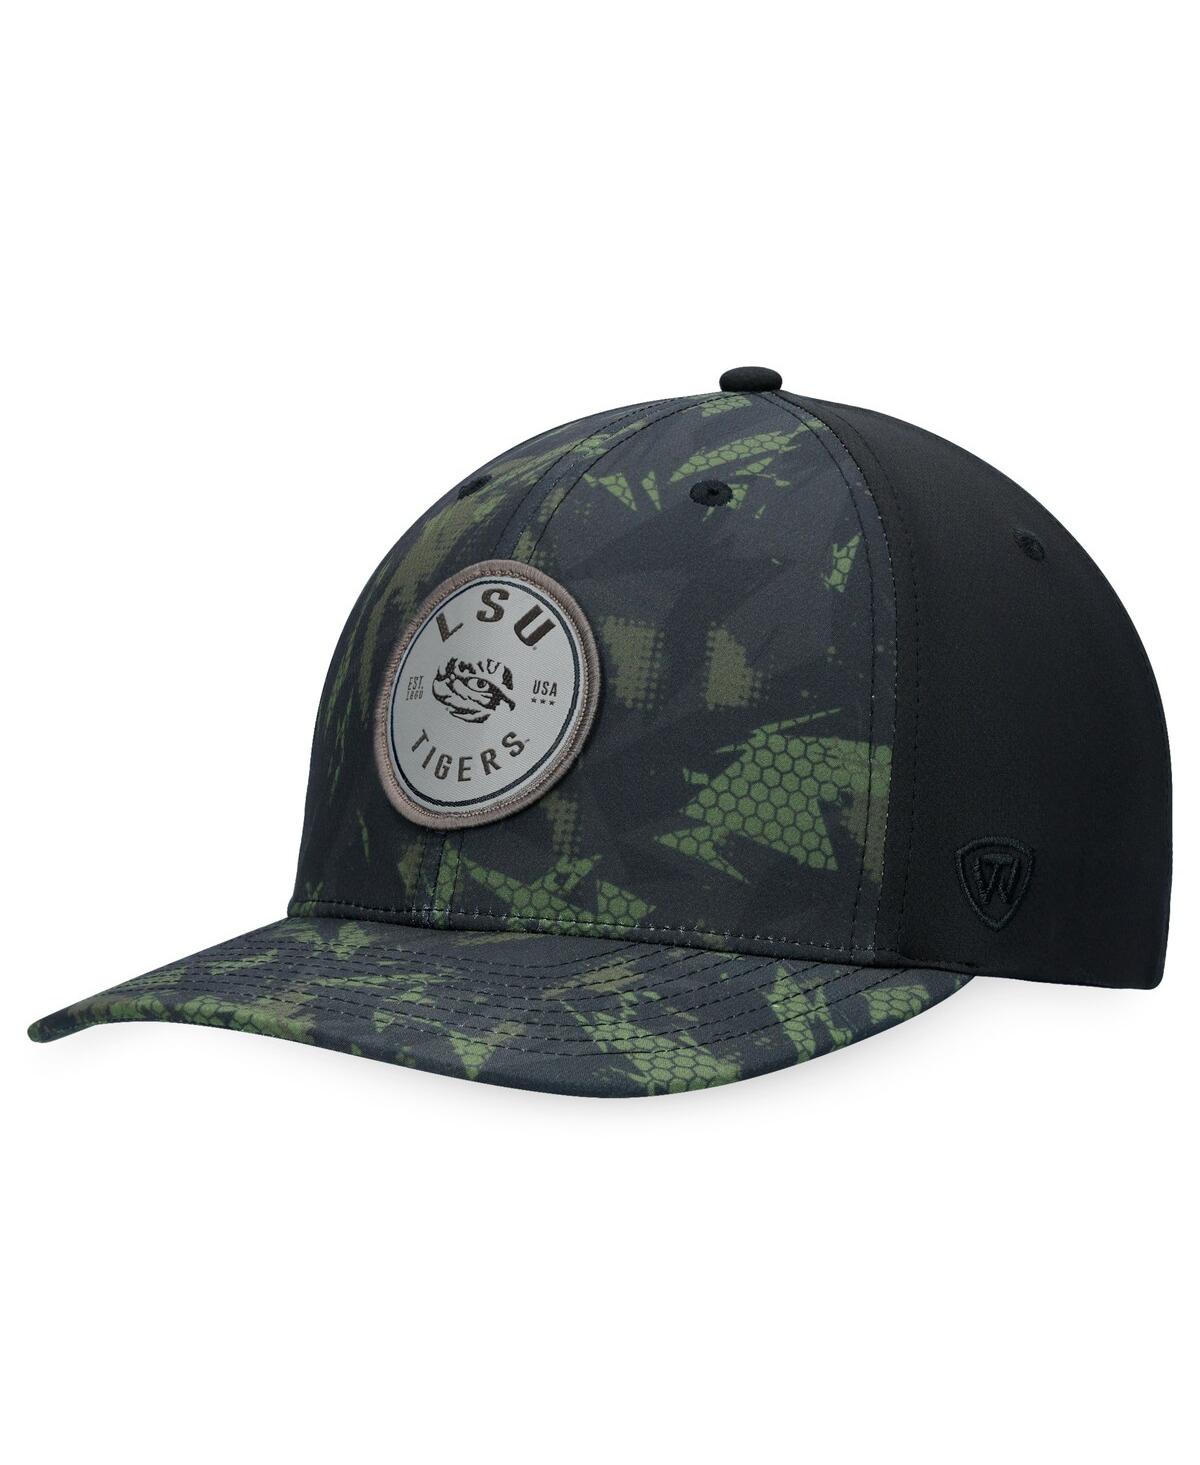 Shop Top Of The World Men's  Black Lsu Tigers Oht Military-inspired Appreciation Camo Render Flex Hat